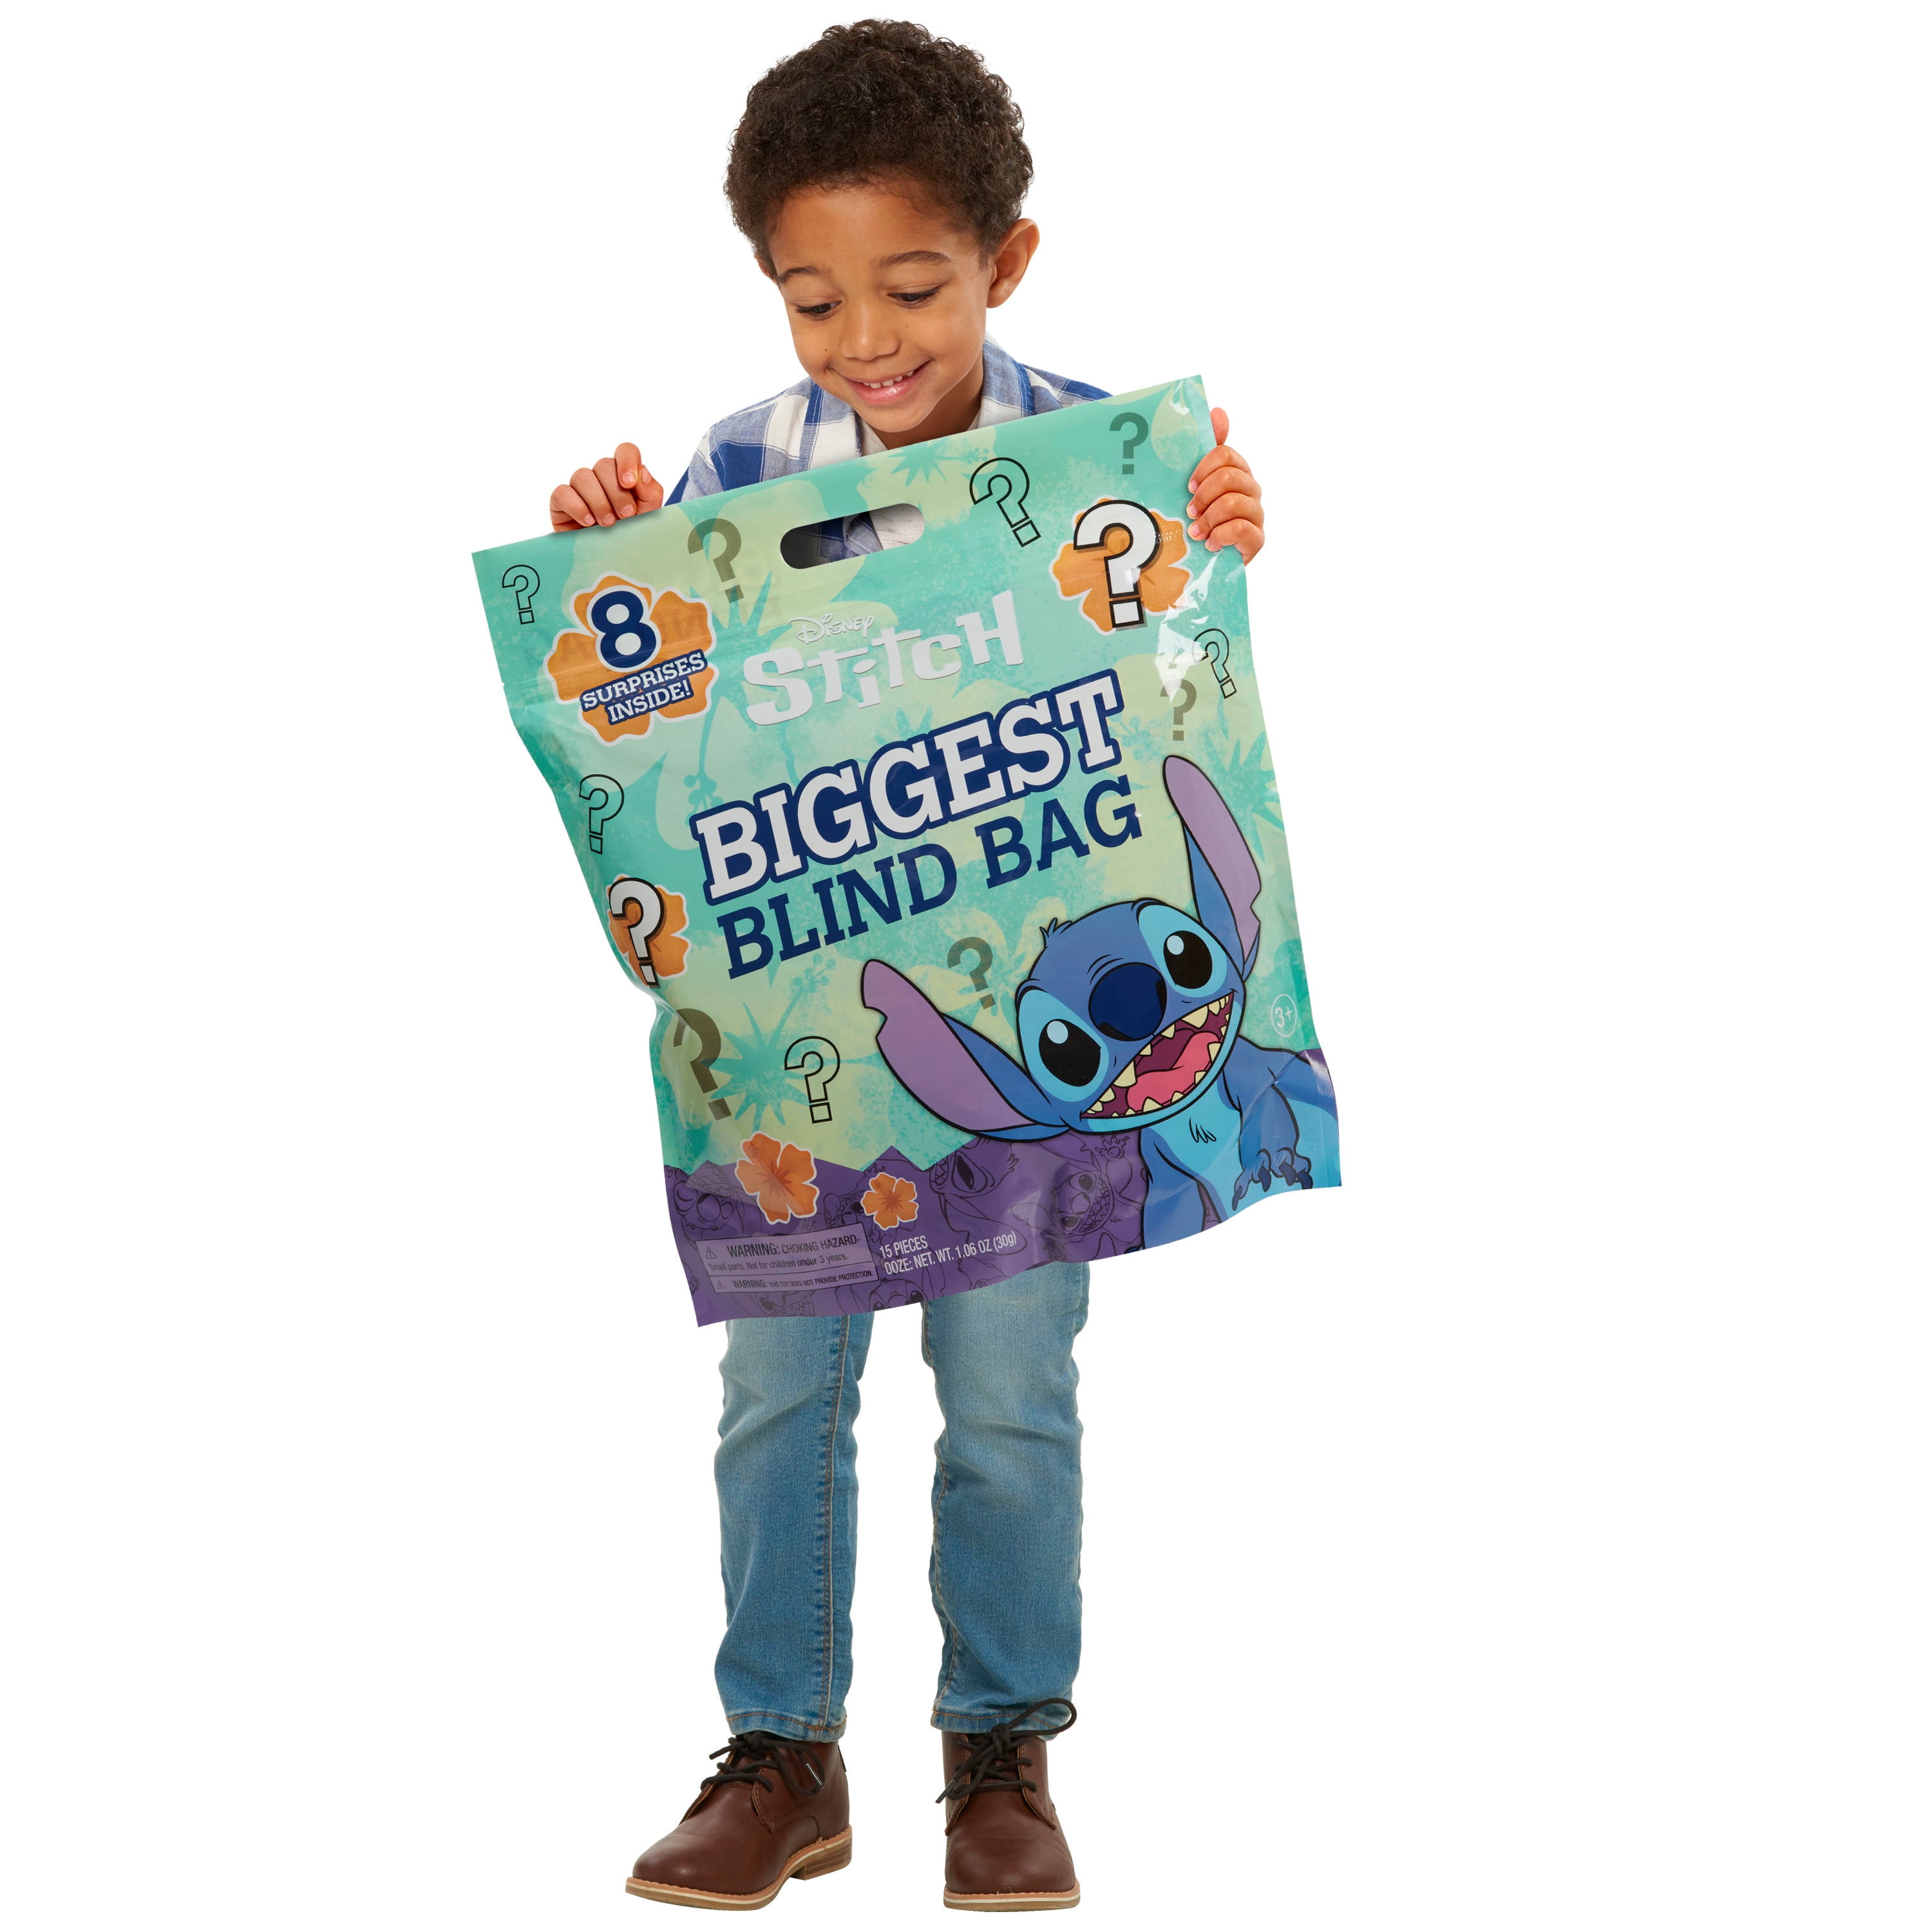 Disney's Lilo & Stitch Biggest Blind Bag, 8 Surprises Inside, Kids Toys for  Ages 3 up 